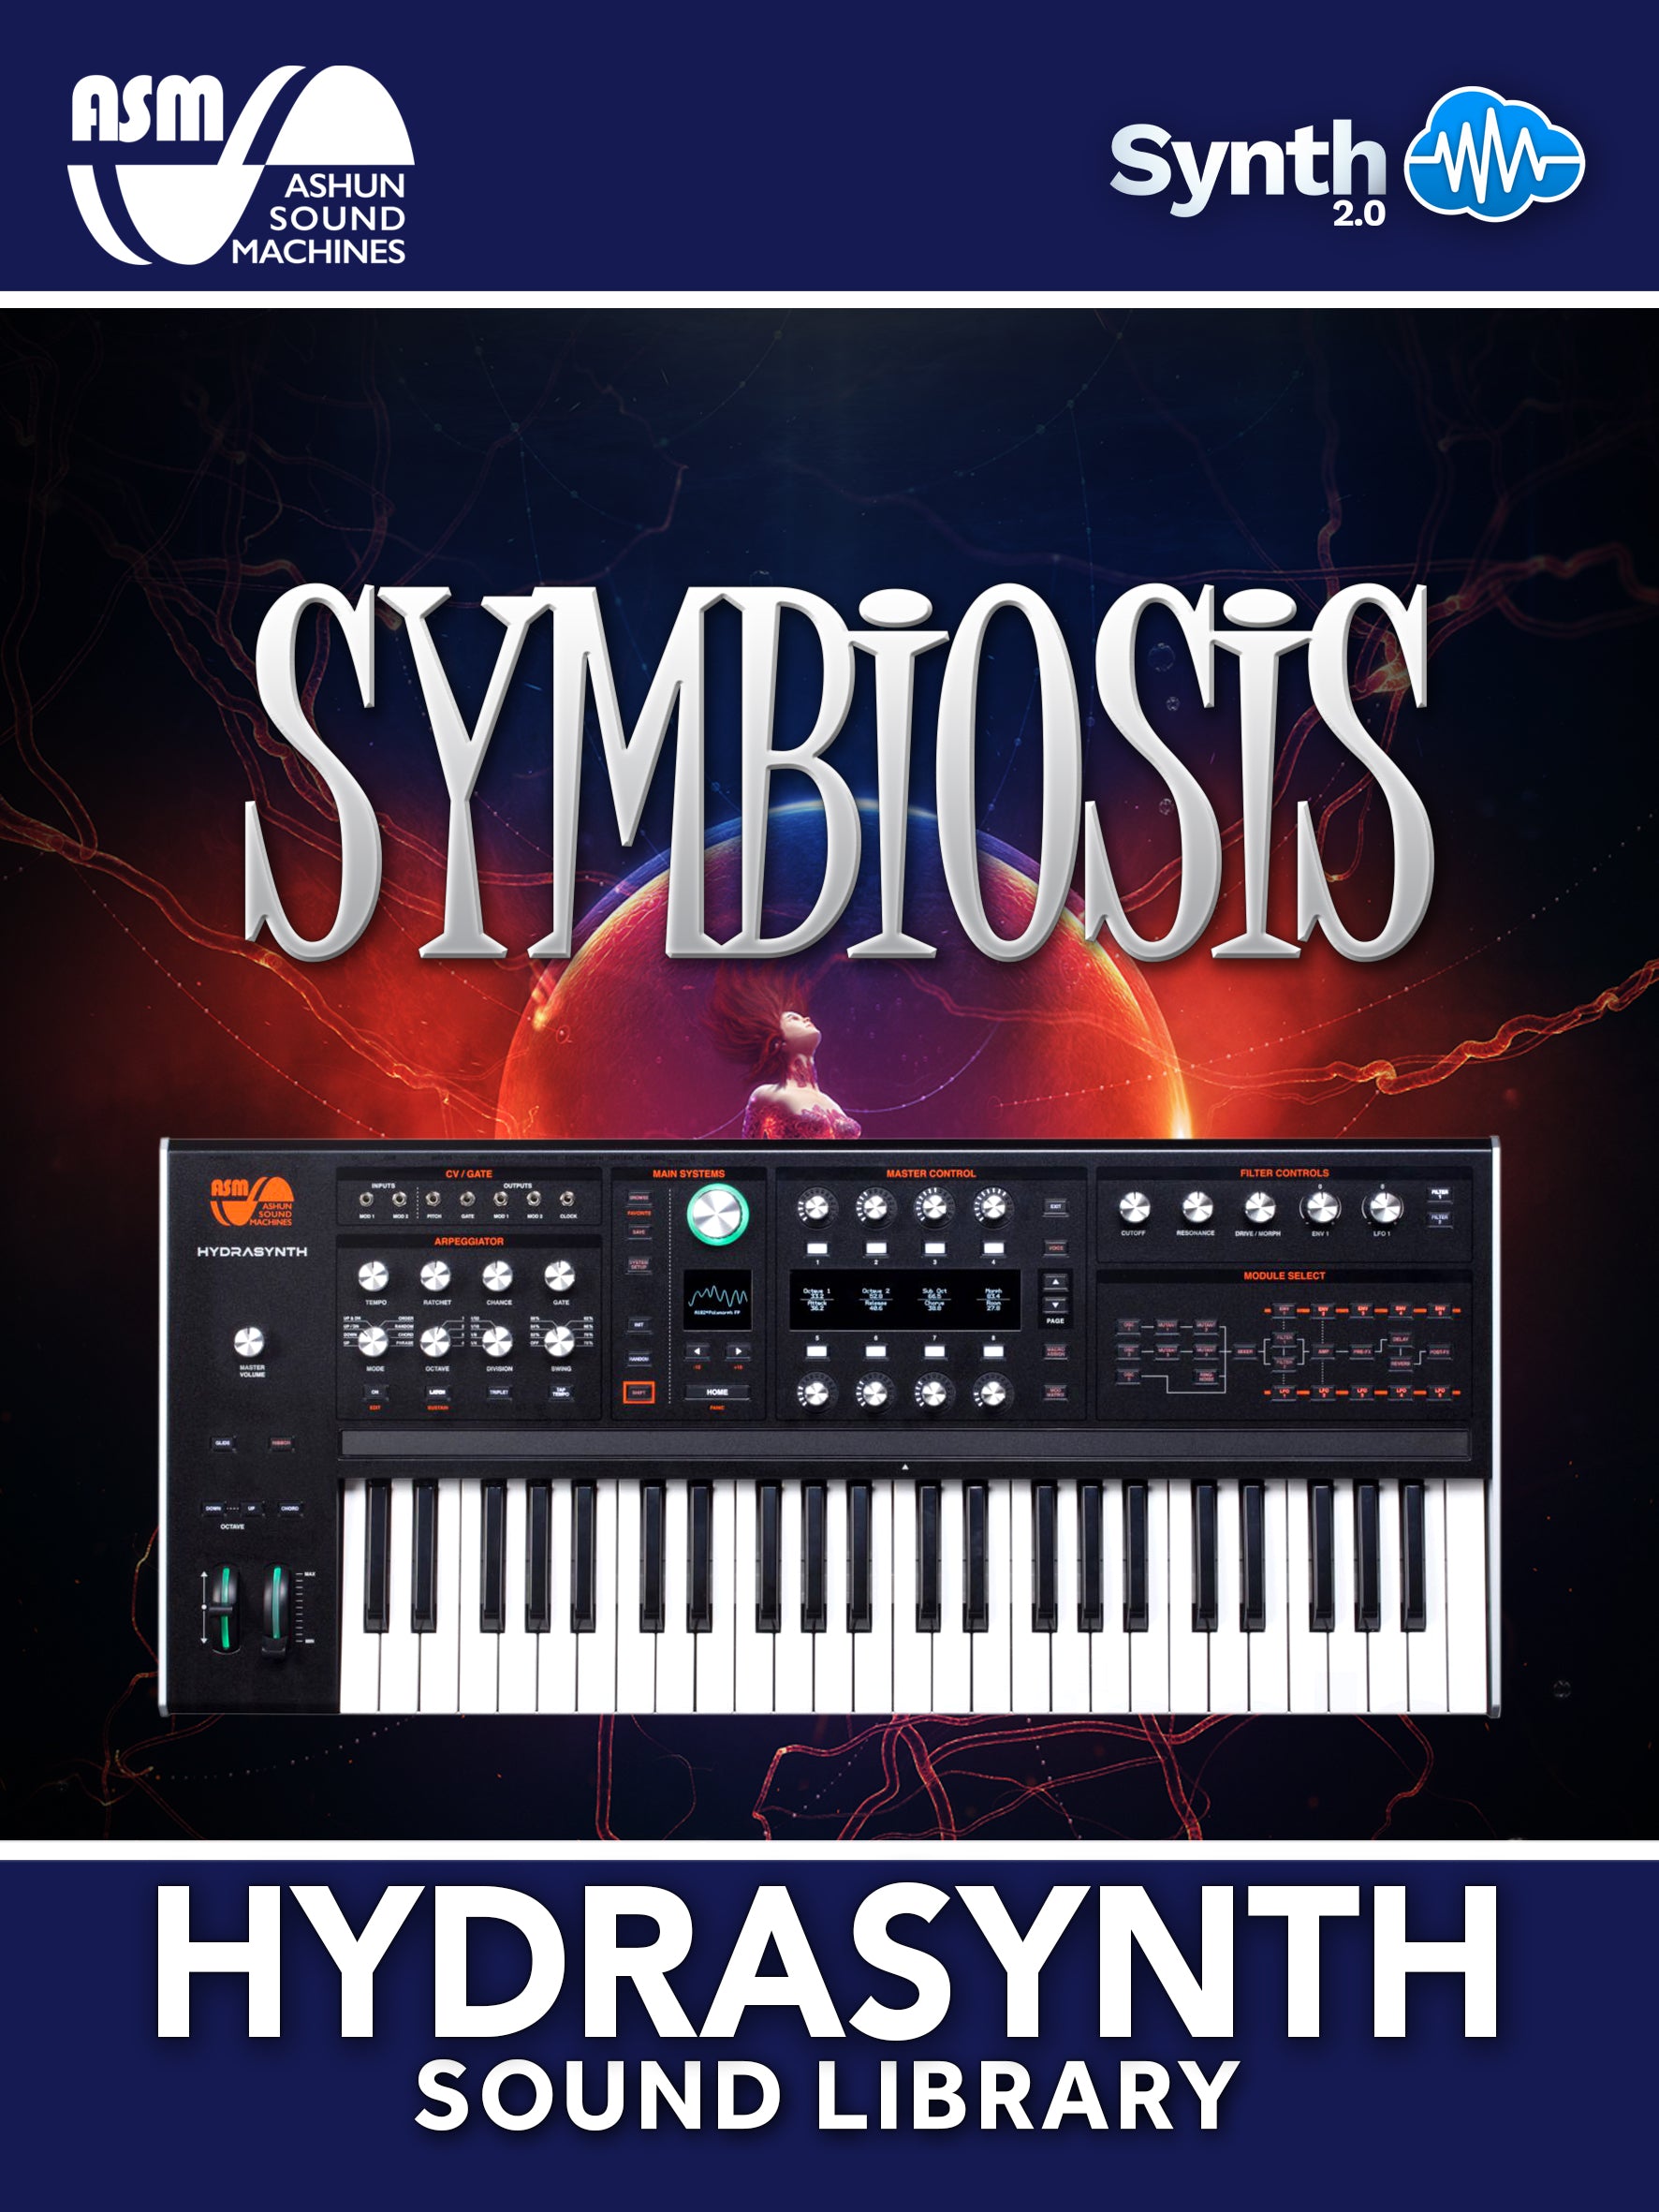 OTL052 - ( Bundle ) - Symbiosis + Dance Evolution - ASM Hydrasynth Series